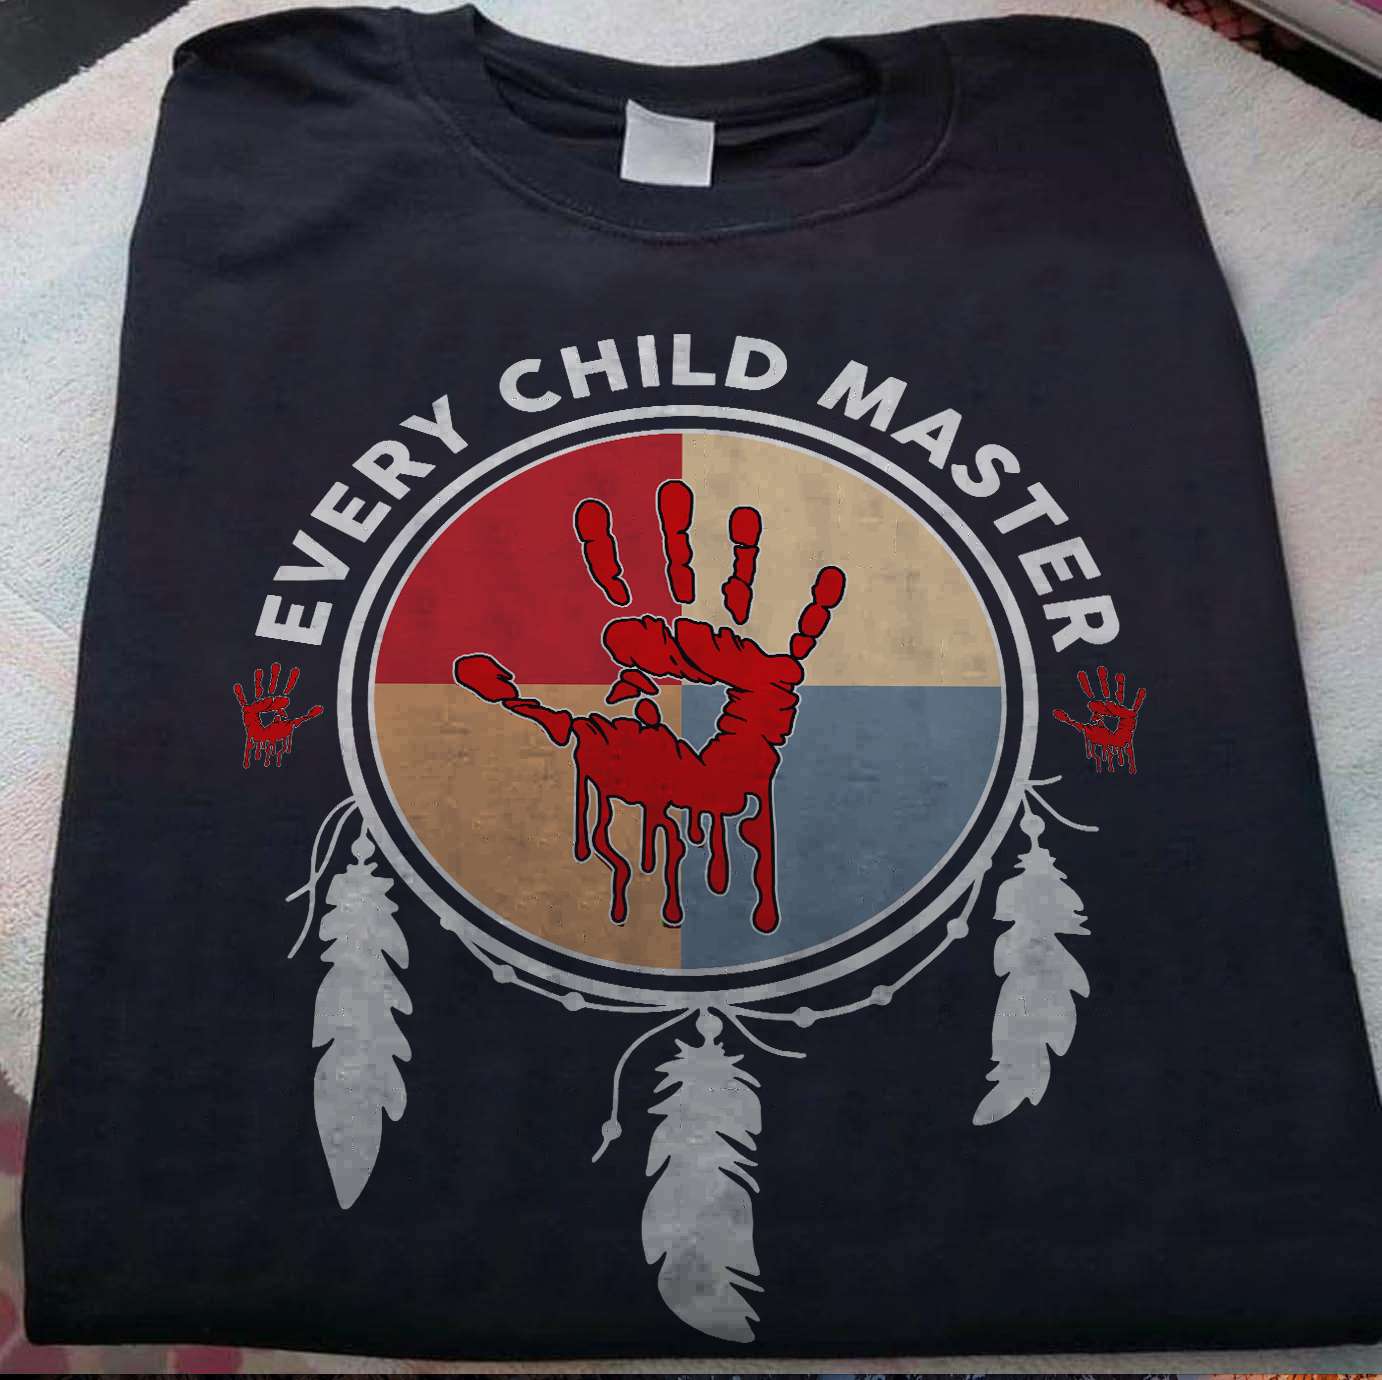 Every child master - Children matter, Native American children